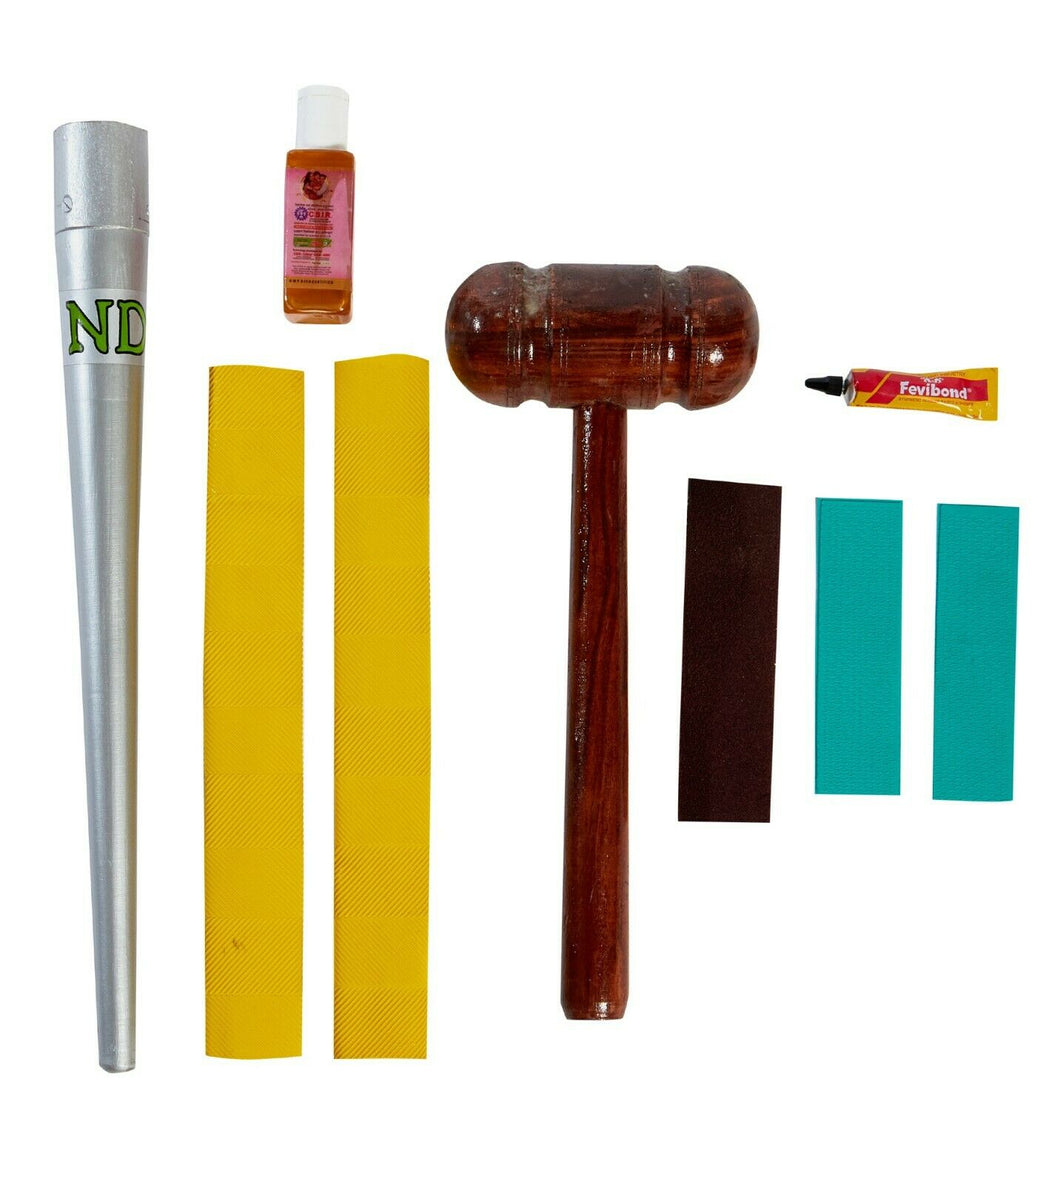 ND Cricket Bat Repair Kit Toe Guard Glue Sand Paper Oil Bat Grip Cone Mallet